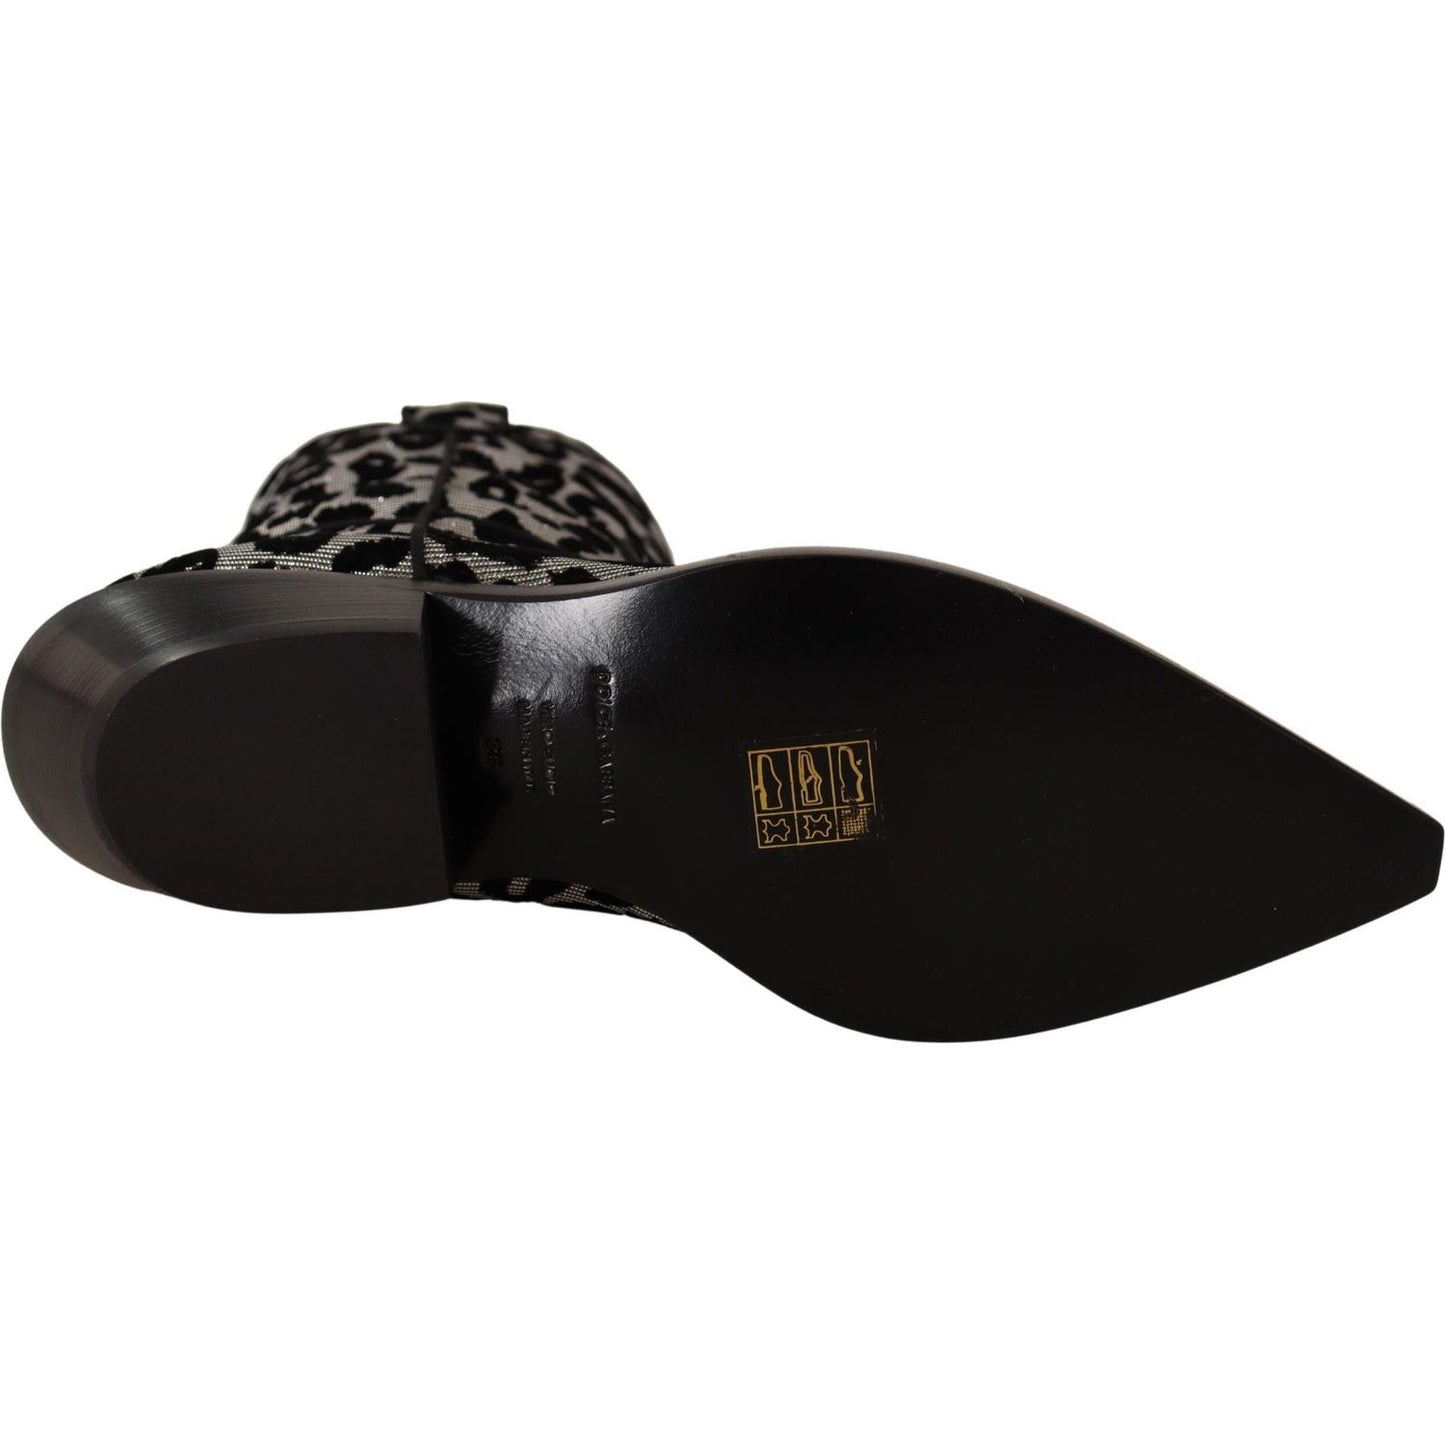 Dolce & Gabbana Elegant Leopard Print Mid Calf Boots gray-black-leopard-cowboy-boots-shoes IMG_6048-scaled-8fae6bc4-428.jpg